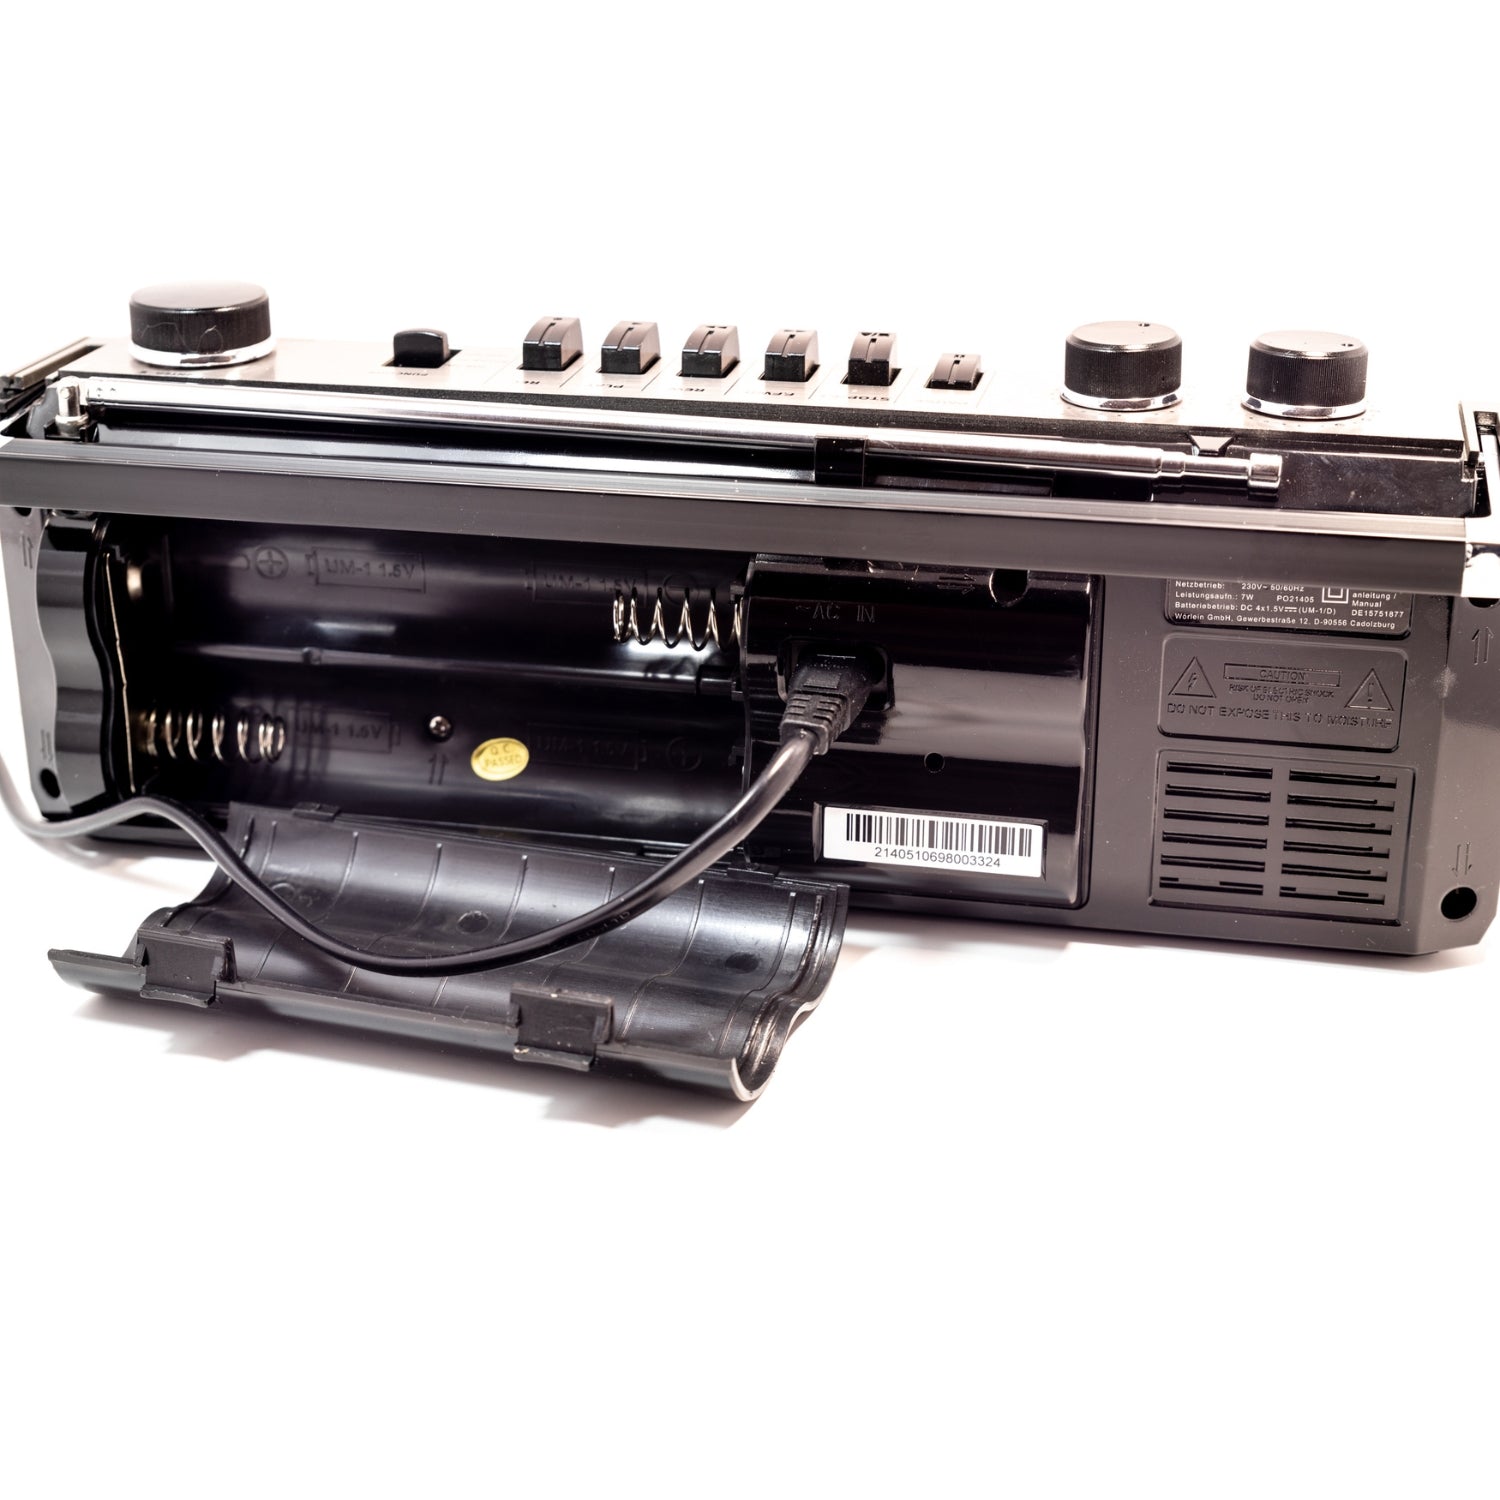 Soundmaster SRR70TI retro radio cassette recorder with DAB+ USB SD and Bluetooth